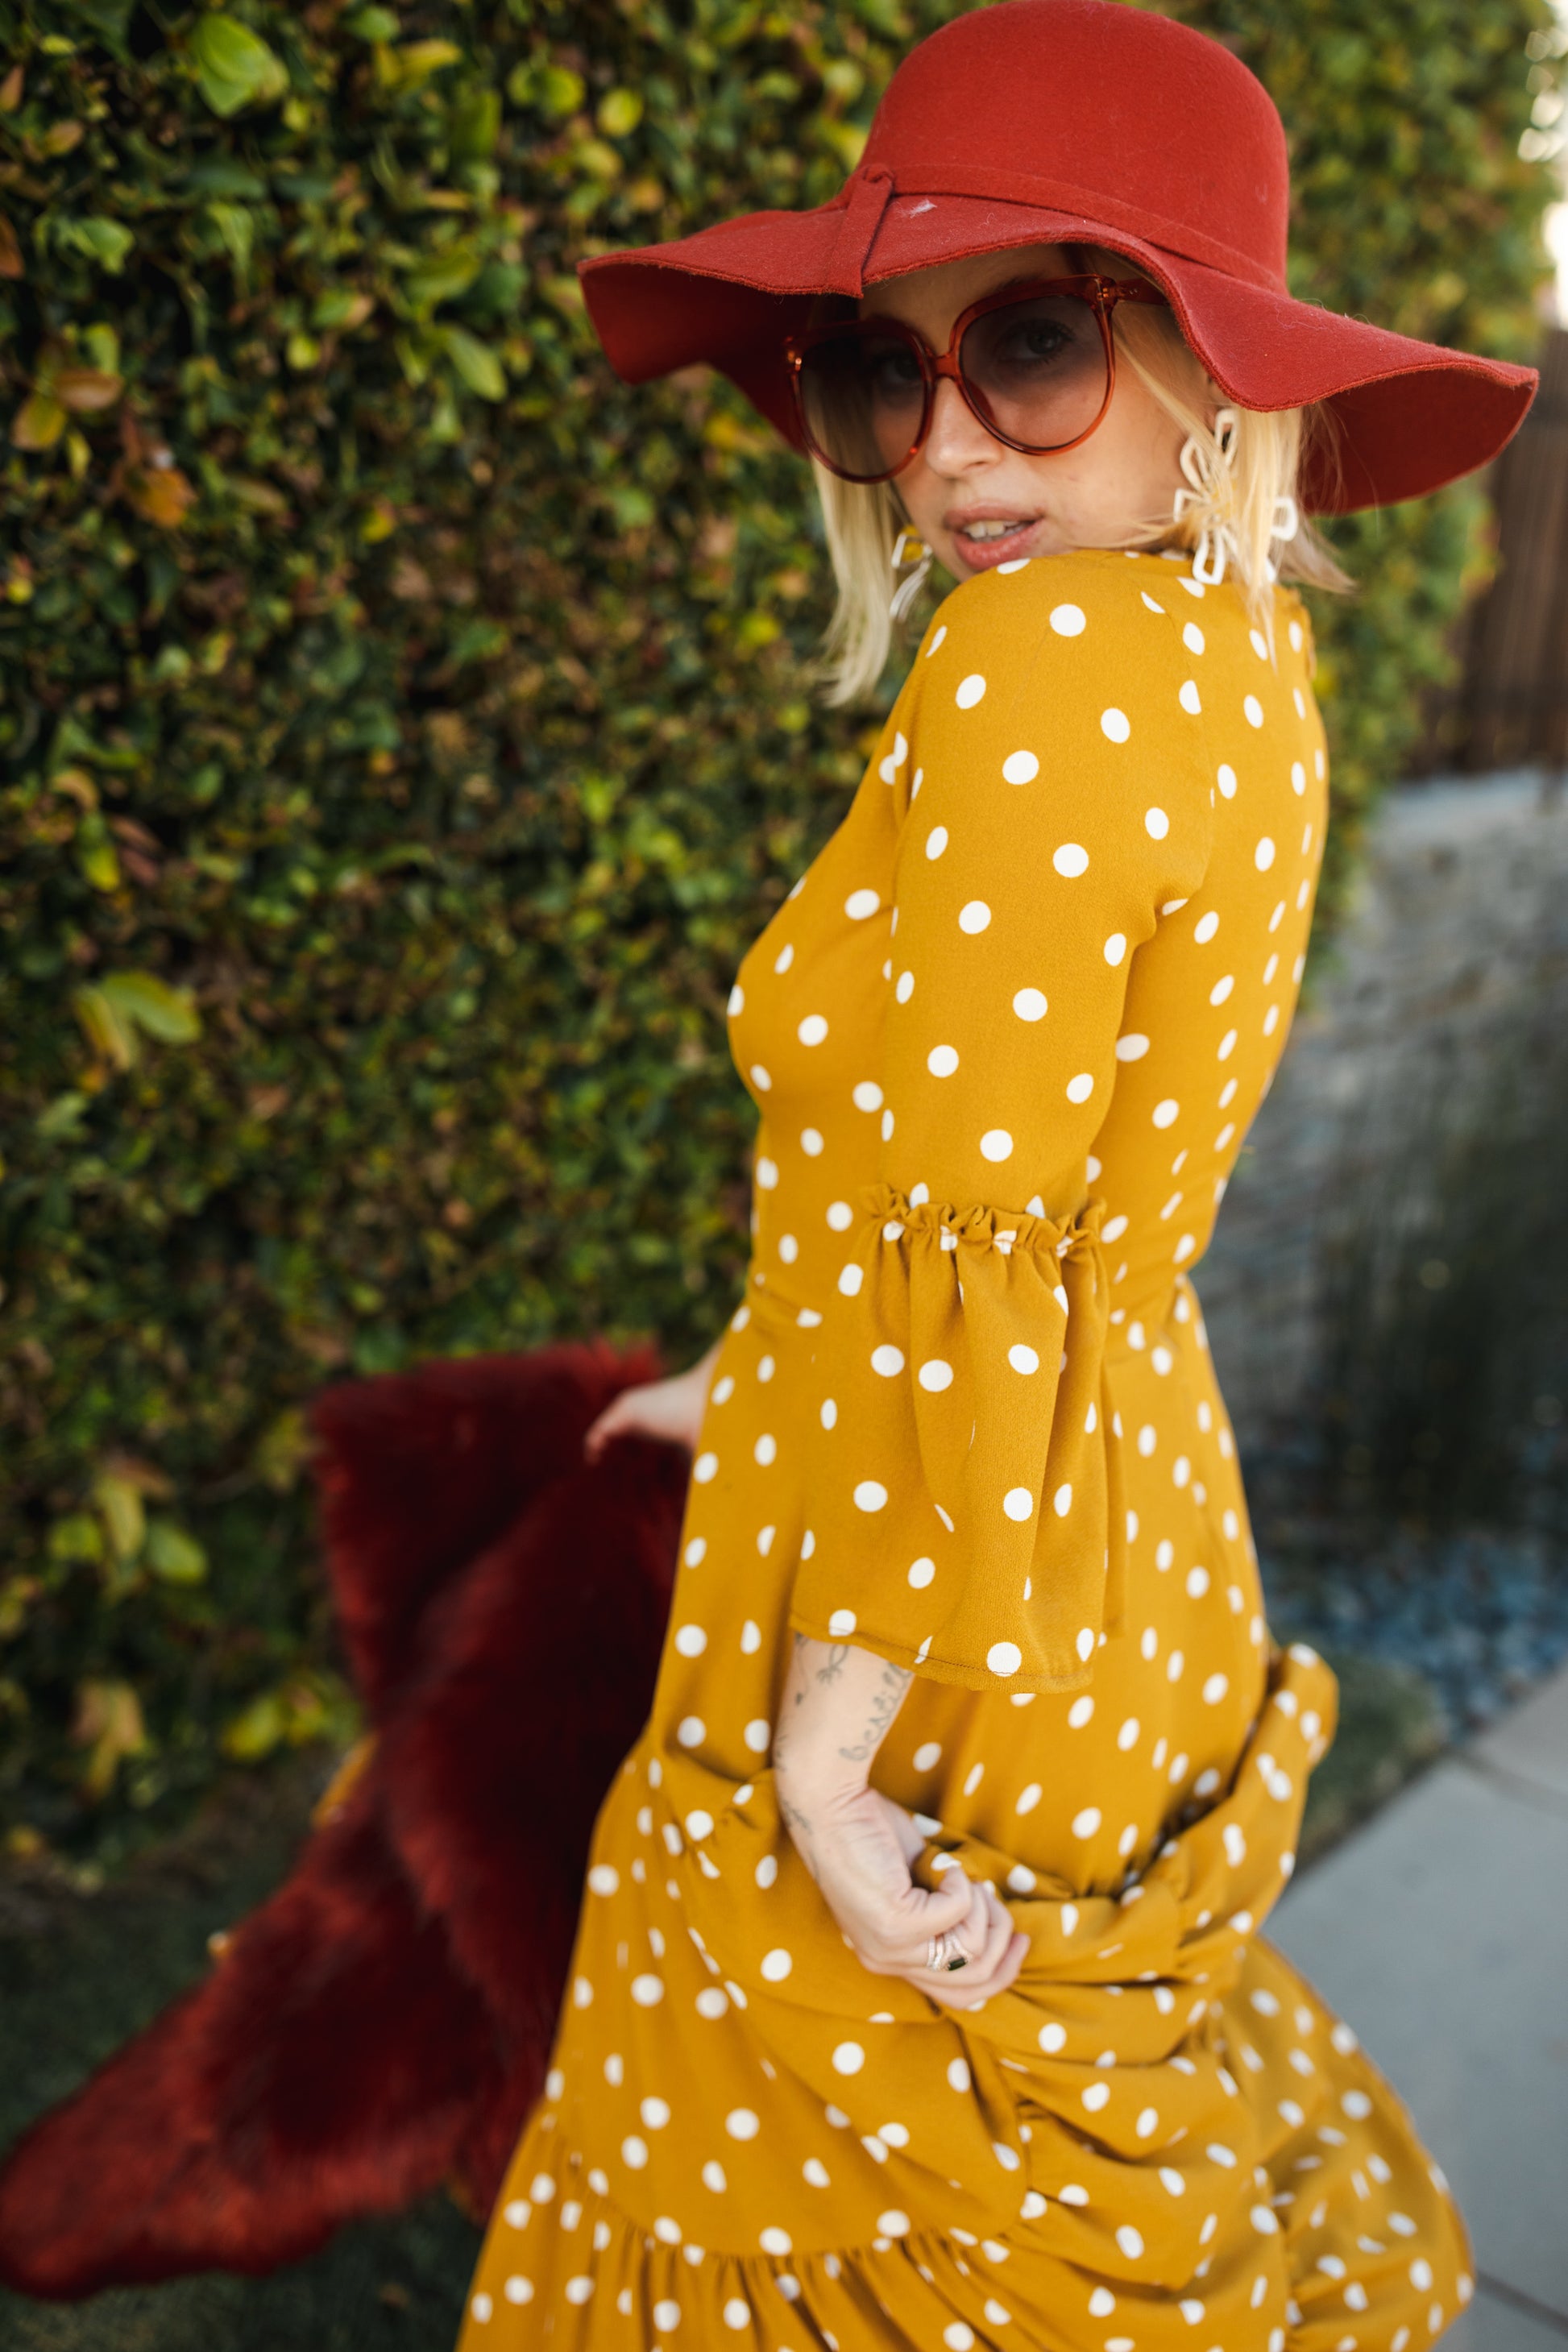 Jennafer Grace Petite Mustard Polka Dot ruffle dress ochre yellow white polka dots summer dress spring evening gown full circle skirt bell sleeves boho bohemian hippie romantic whimsical unisex handmade in California USA